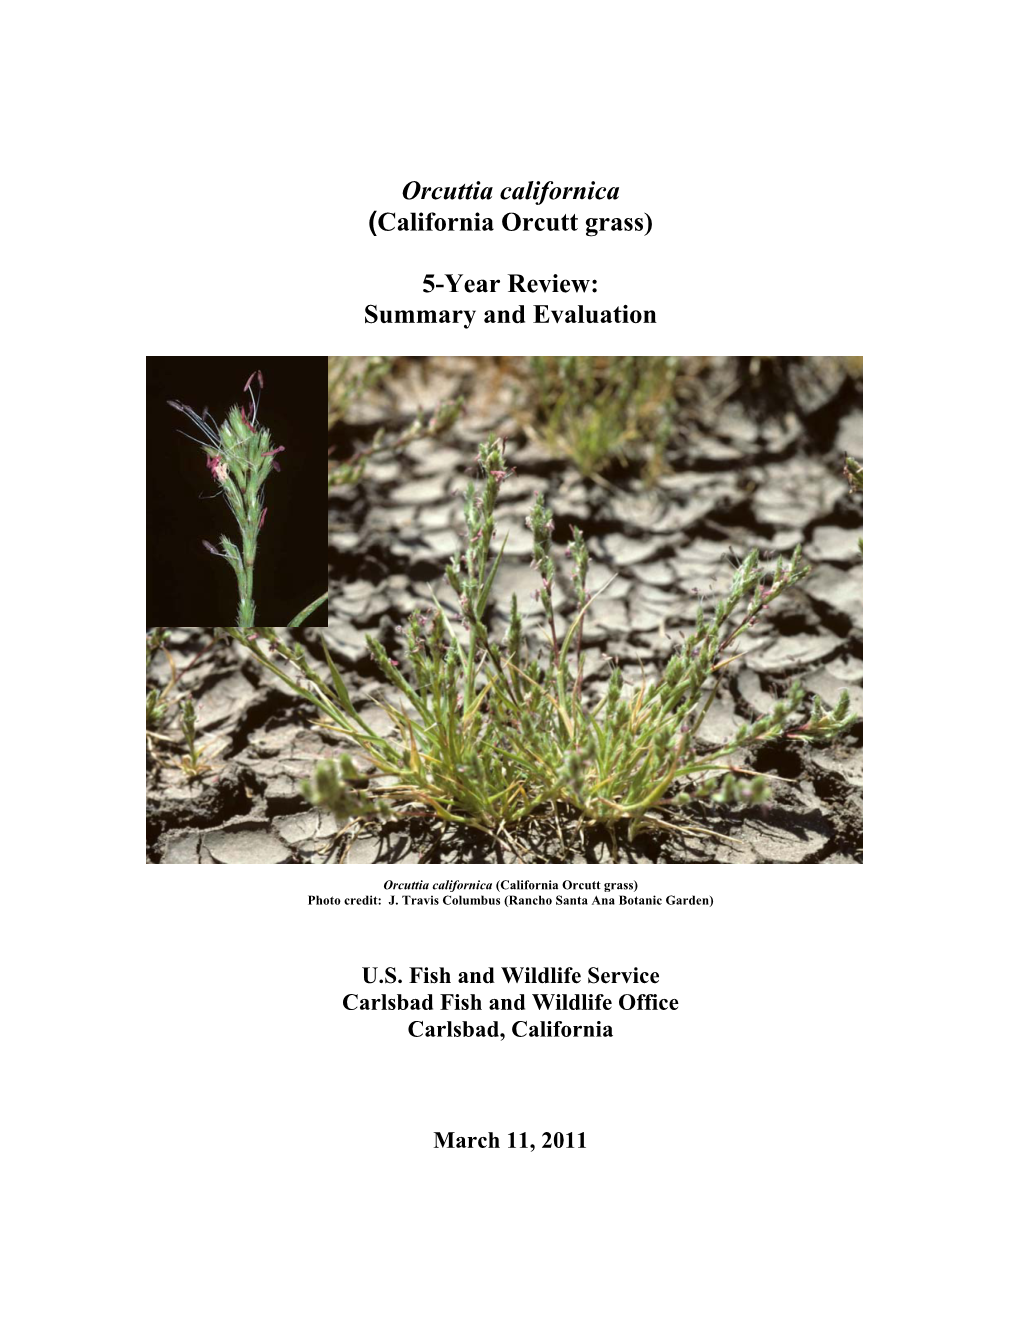 Orcuttia Californica (California Orcutt Grass) 5-Year Review